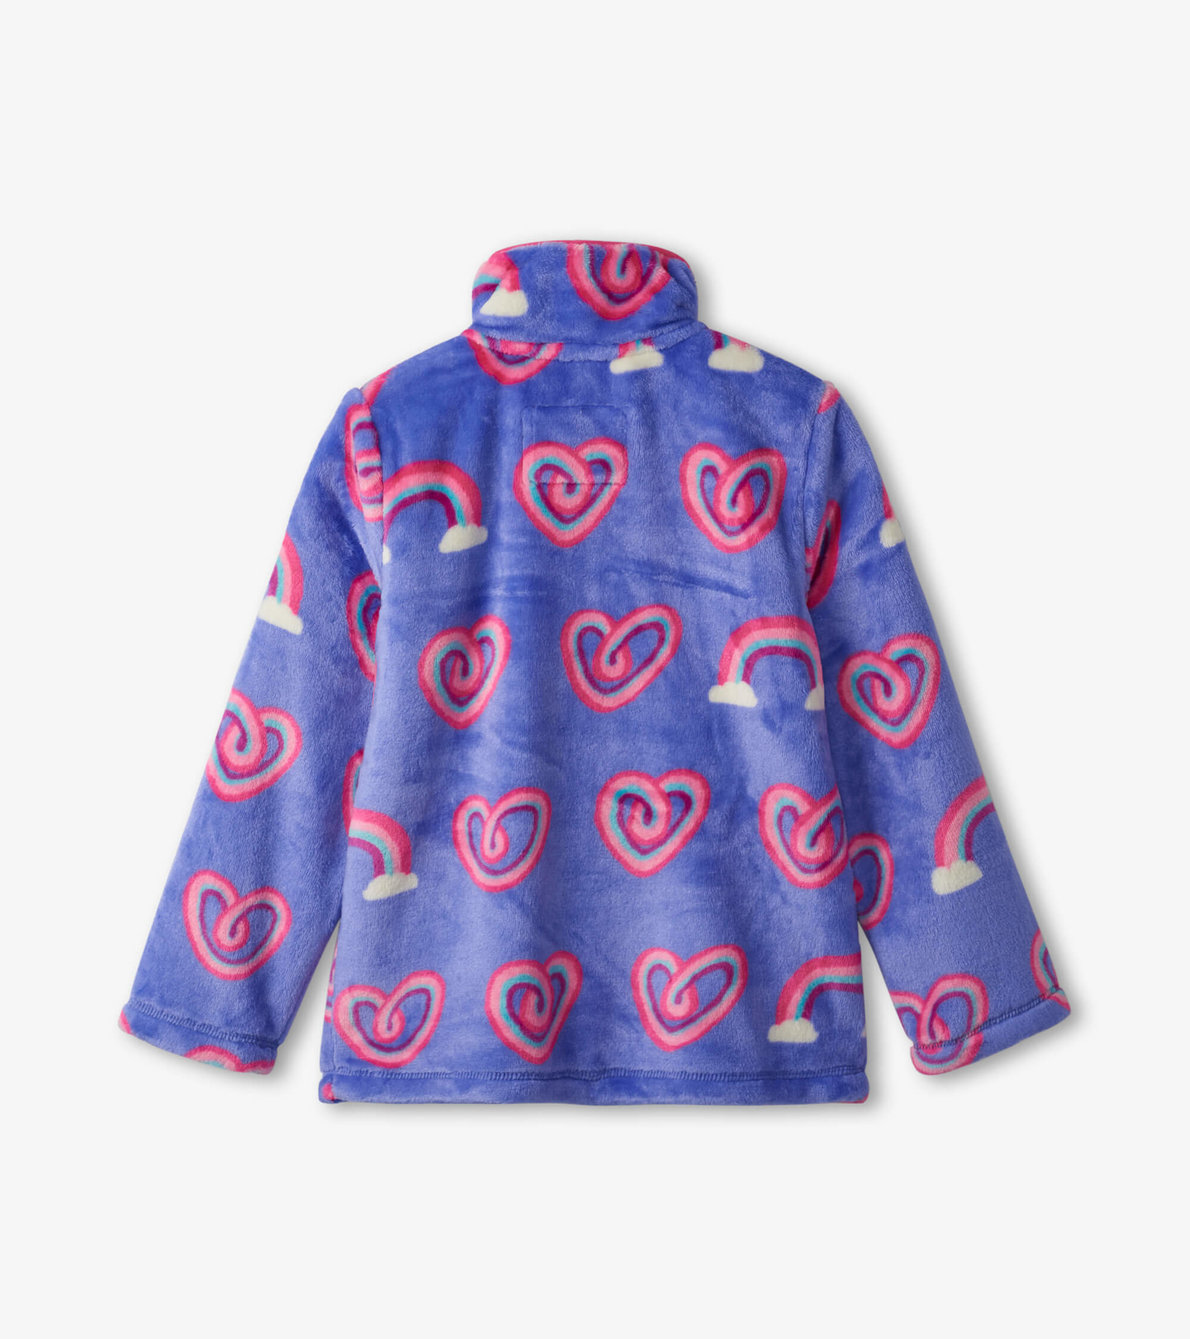 View larger image of Twisty Rainbow Hearts Fuzzy Fleece Zip Up